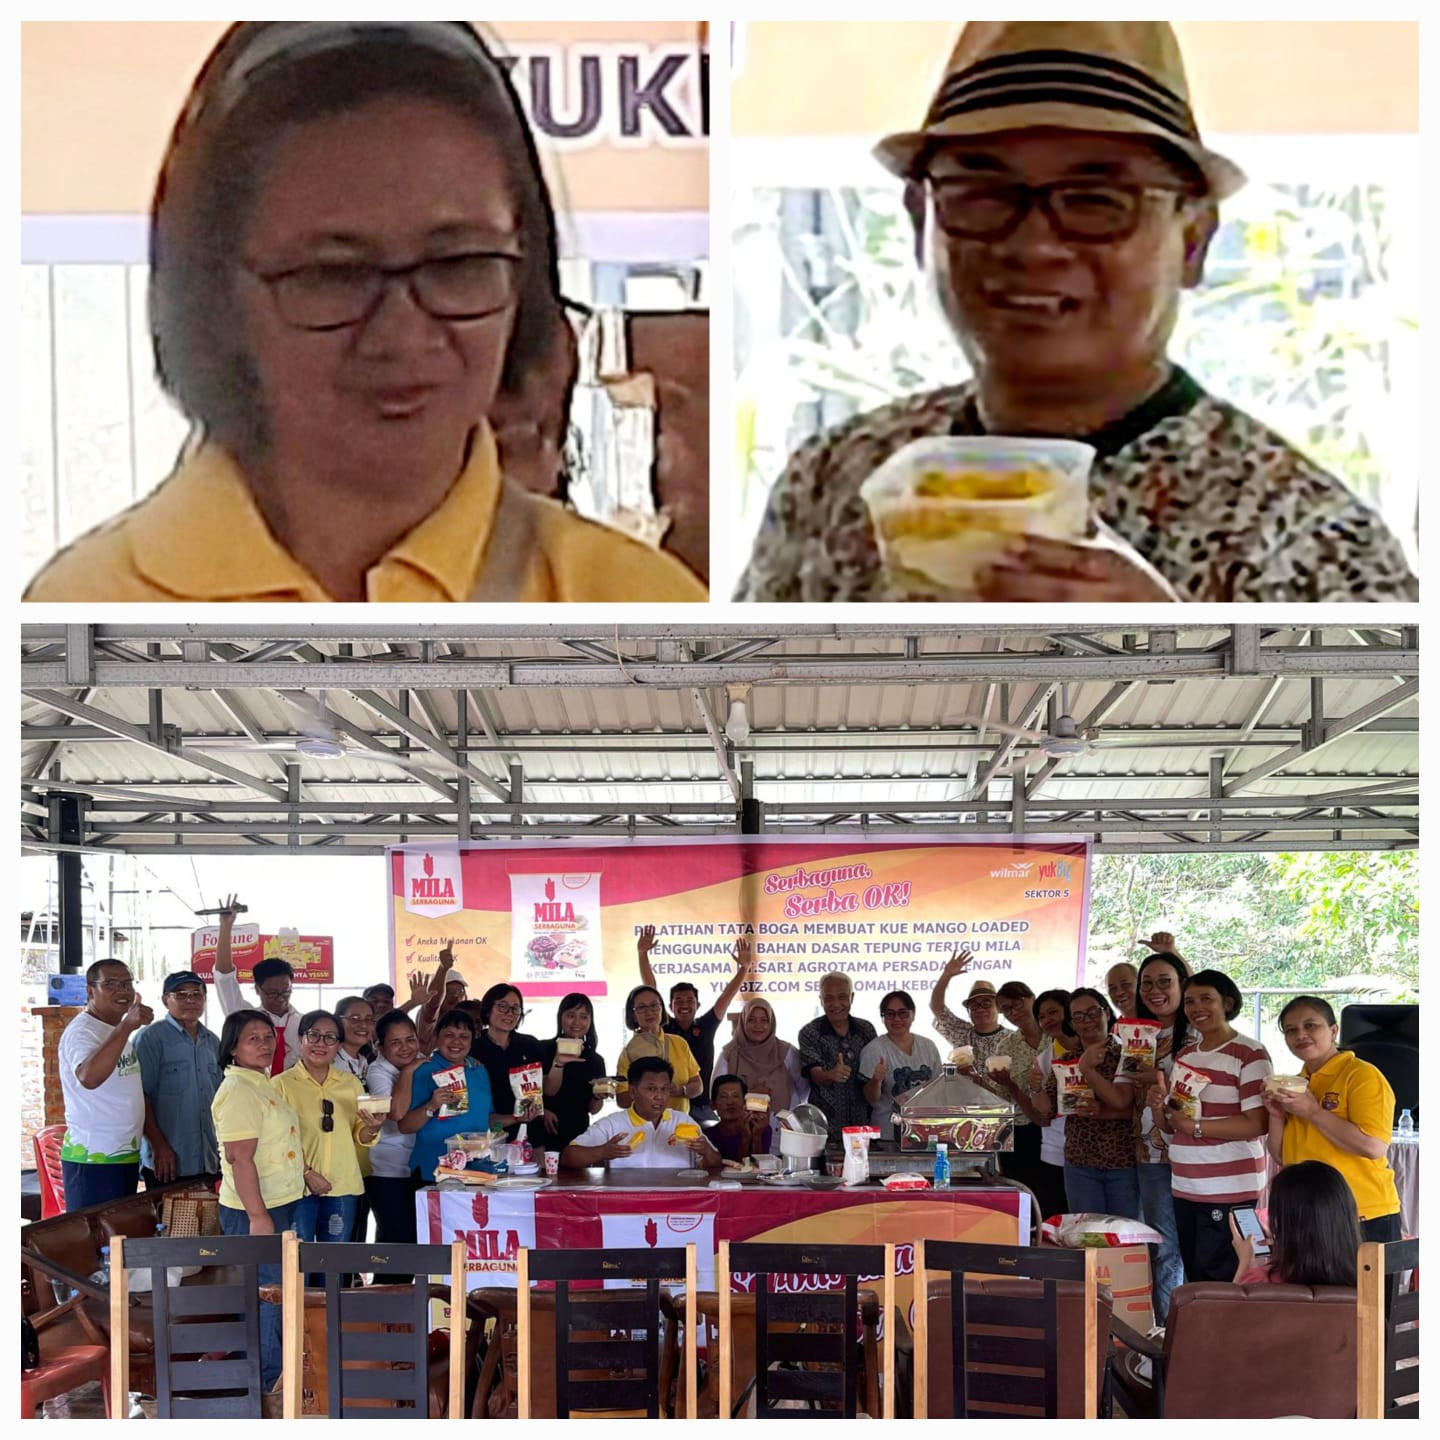 Pelatihan Memasak Mango Loaded Sektor 5 Bersama Yukbiz.com dan PT Sari Agrotama Persada Berlangsung Meriah